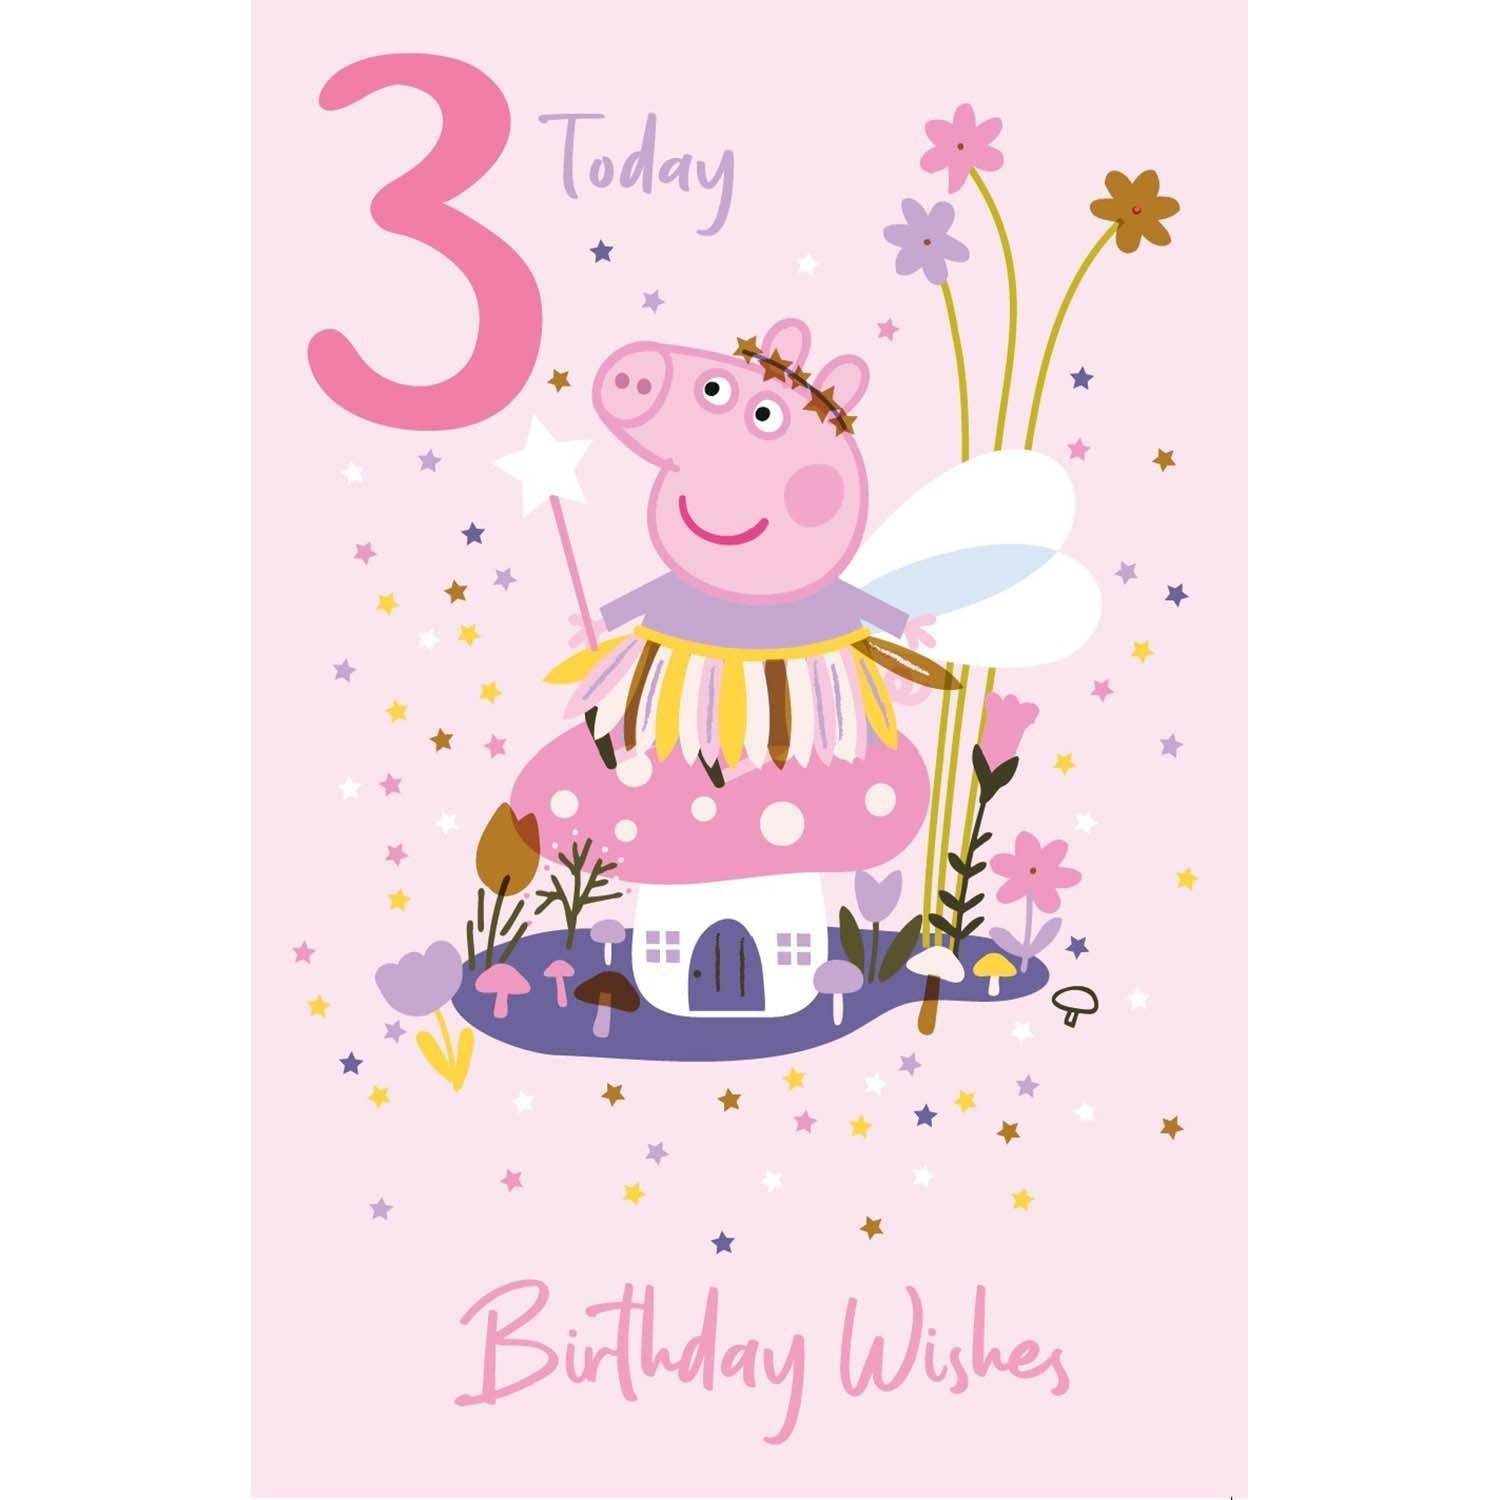 Peppa Pig 3rd Birthday Jump for joy! Activity Inside